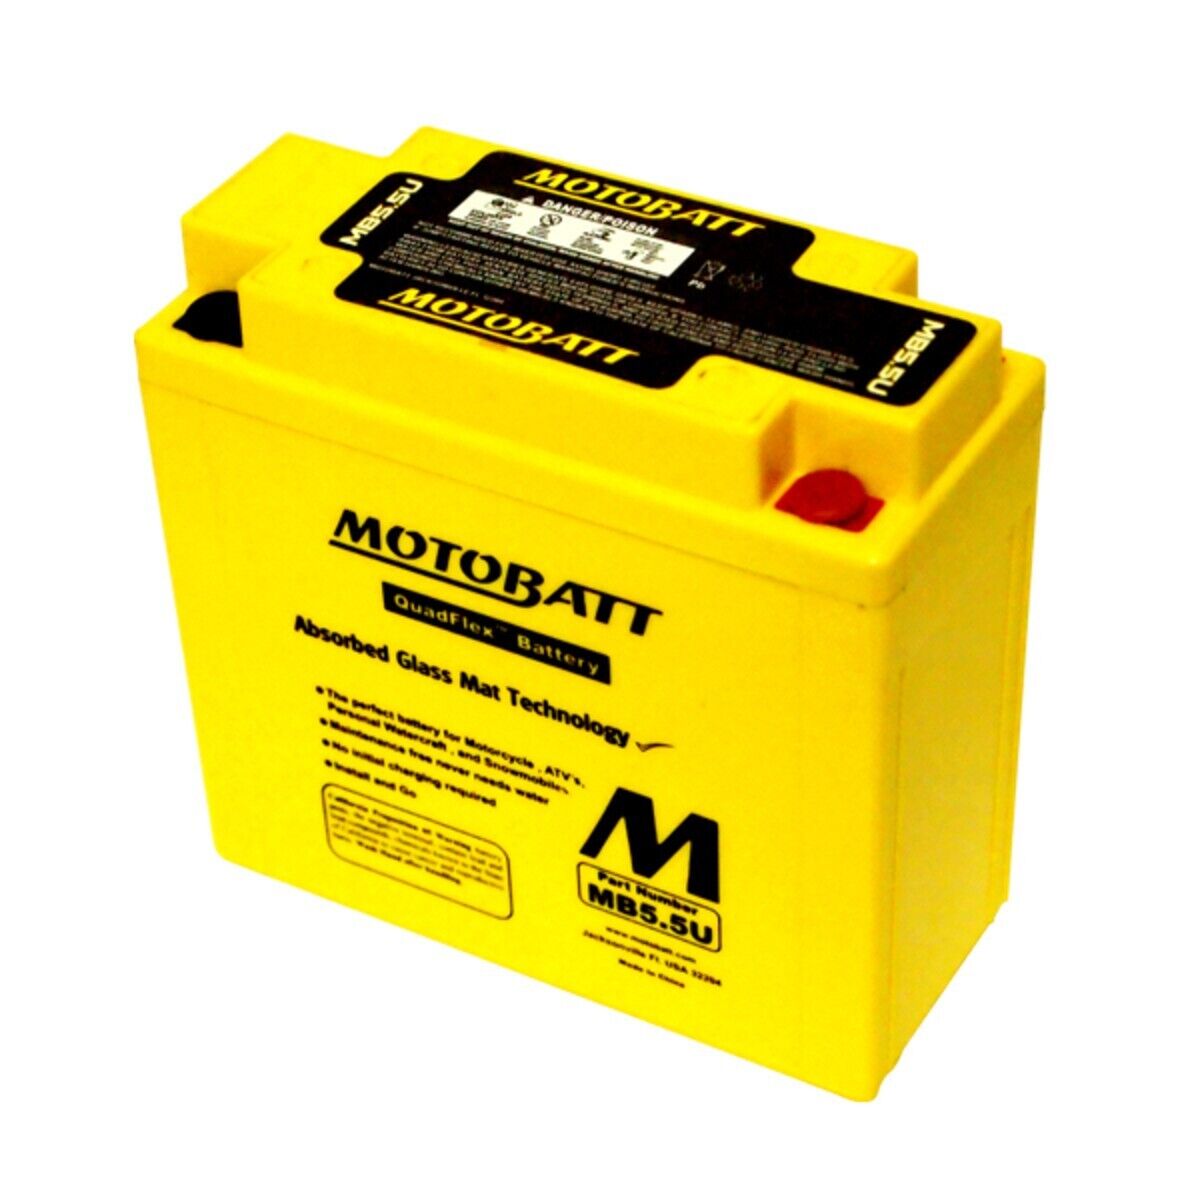 ✅ New Motobatt MB5.5U QUADFLEX 12V AGM Battery Factory - Fast Freeship 48hrs ✅